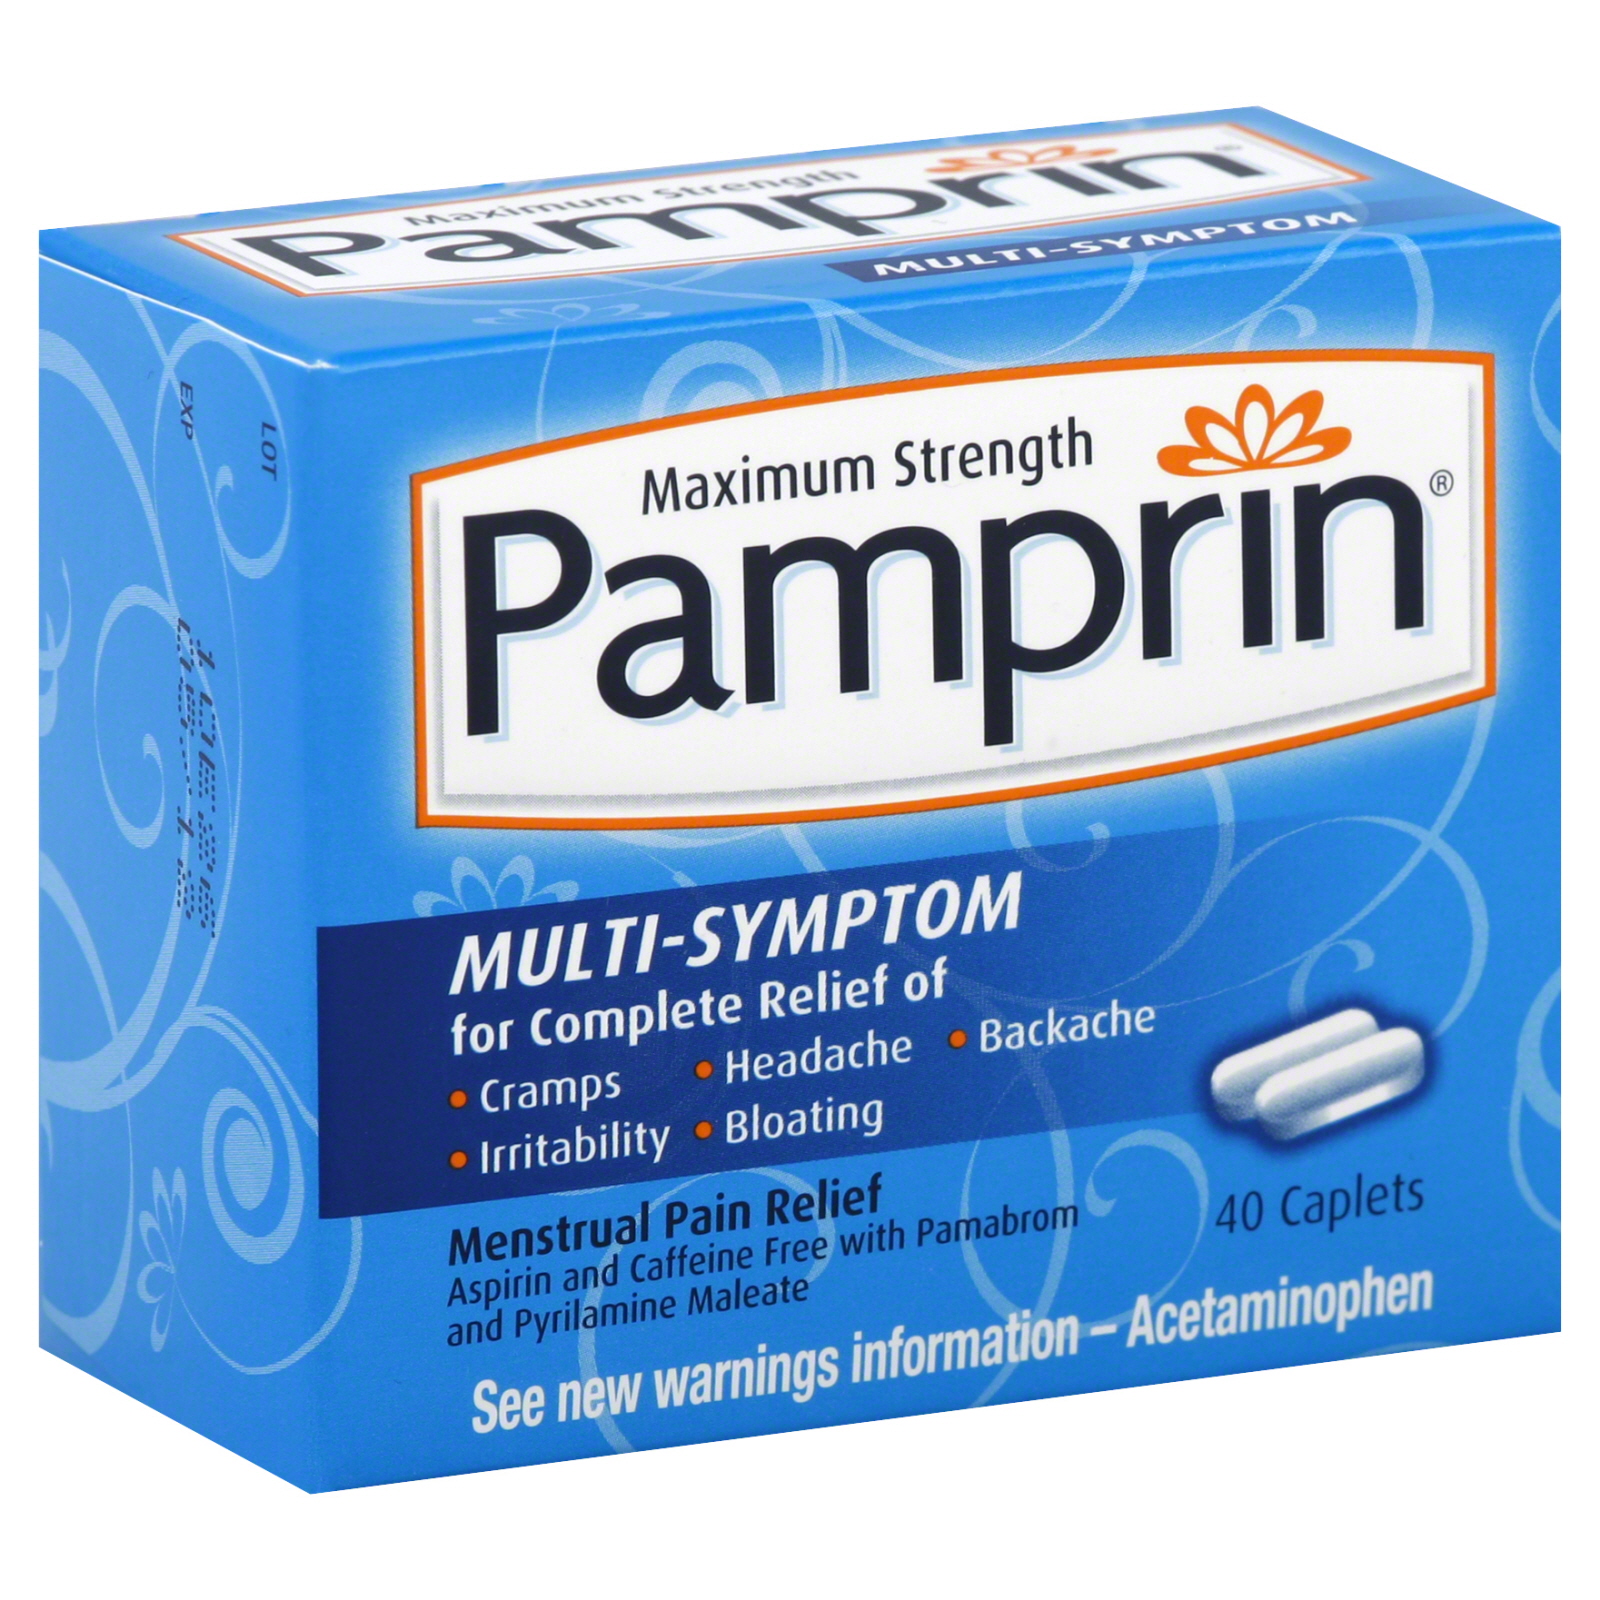 Pamprin Menstrual Pain Relief, Maximum Strength, Multi-Symptom, Caplets, Value Size, 40 caplets